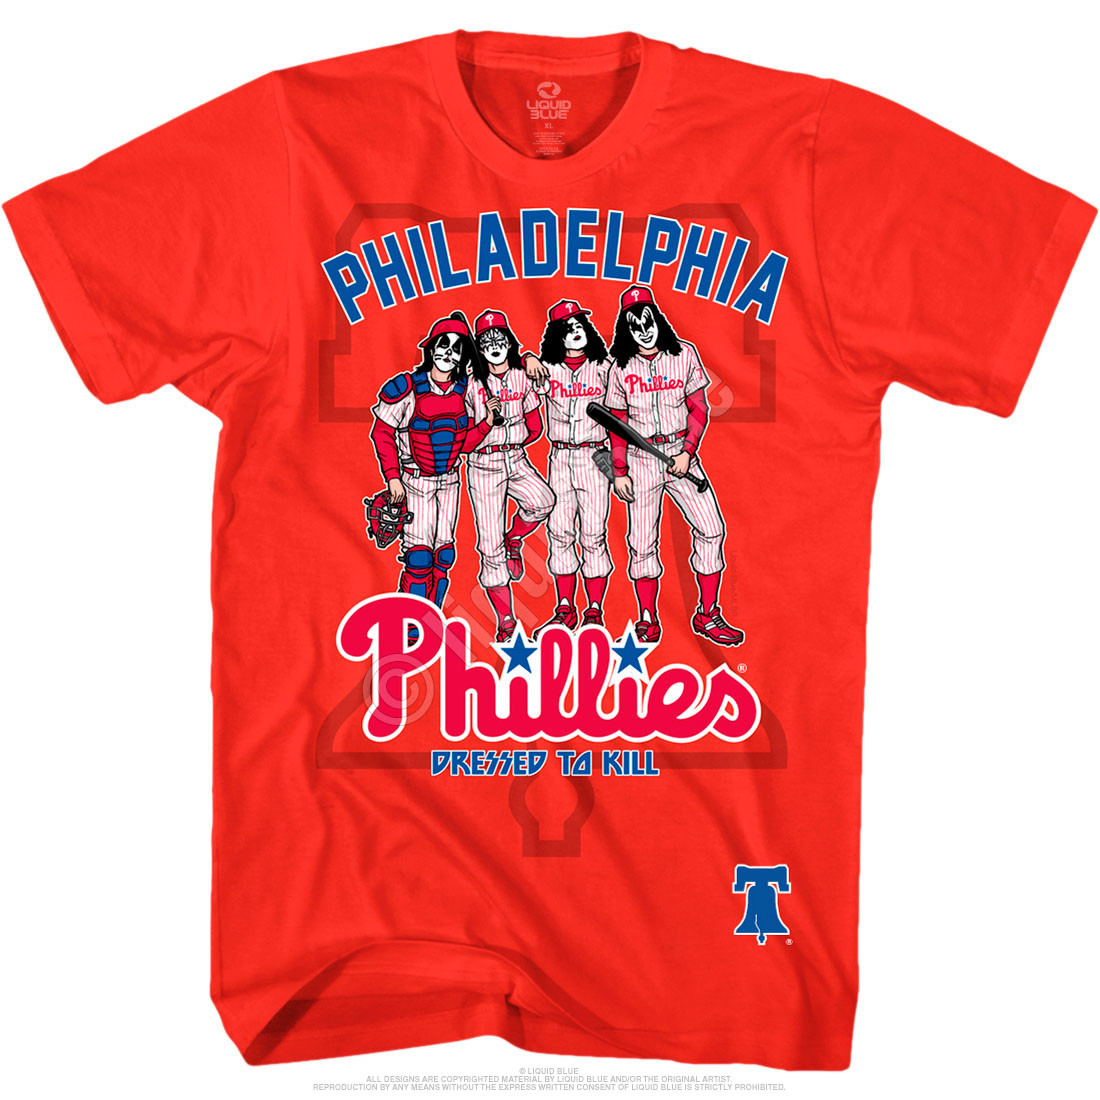 phillies shirts